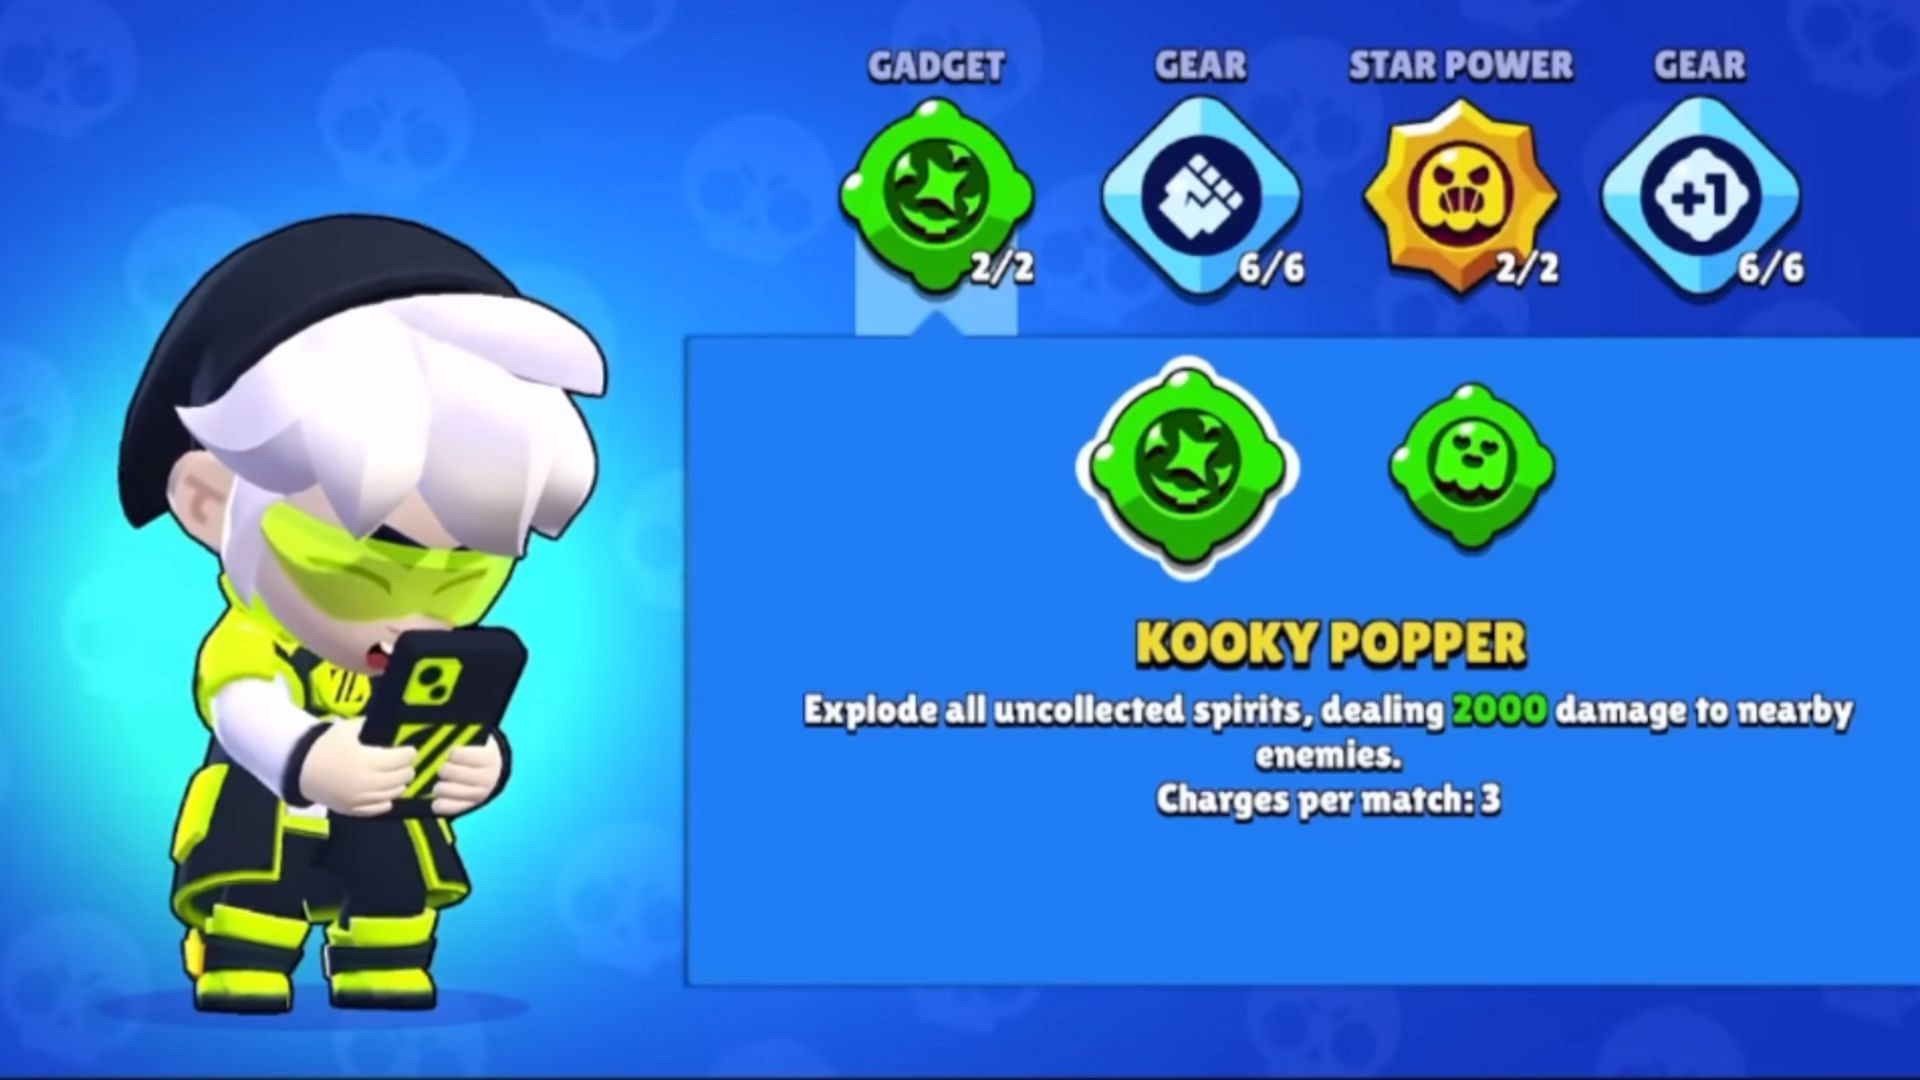 Kooky Popper Gadget (Image via Supercell)